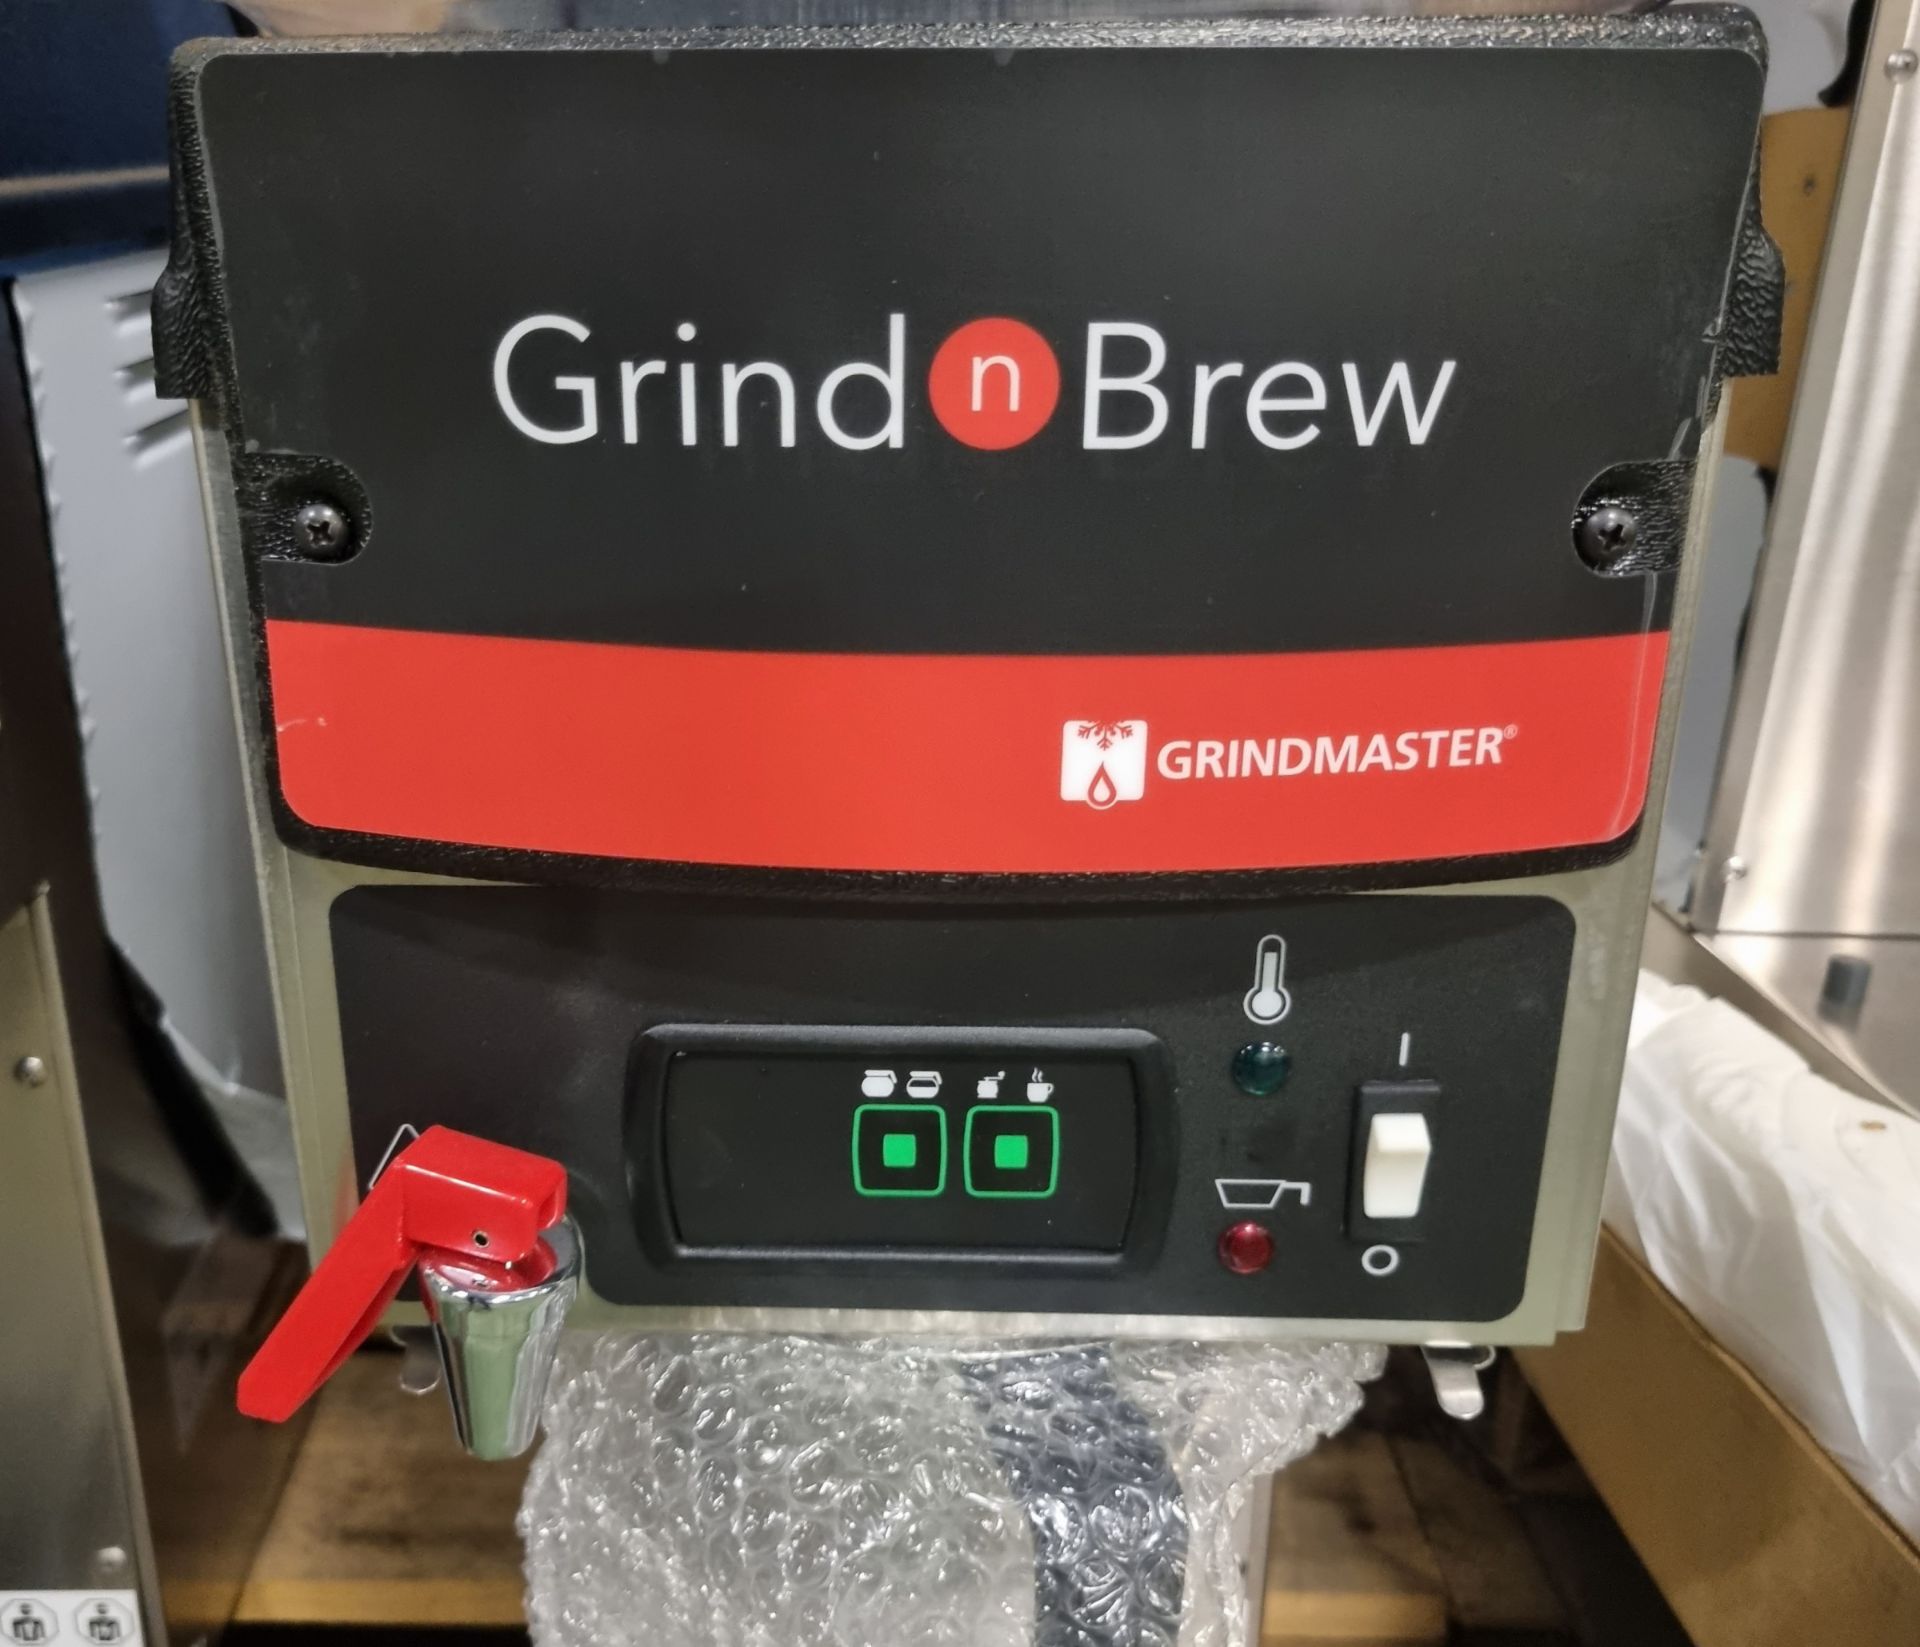 Electrolux Coffee Grinder, Single 2.5Kg Decanter - Grind n Brew Grindmaster - Image 4 of 5